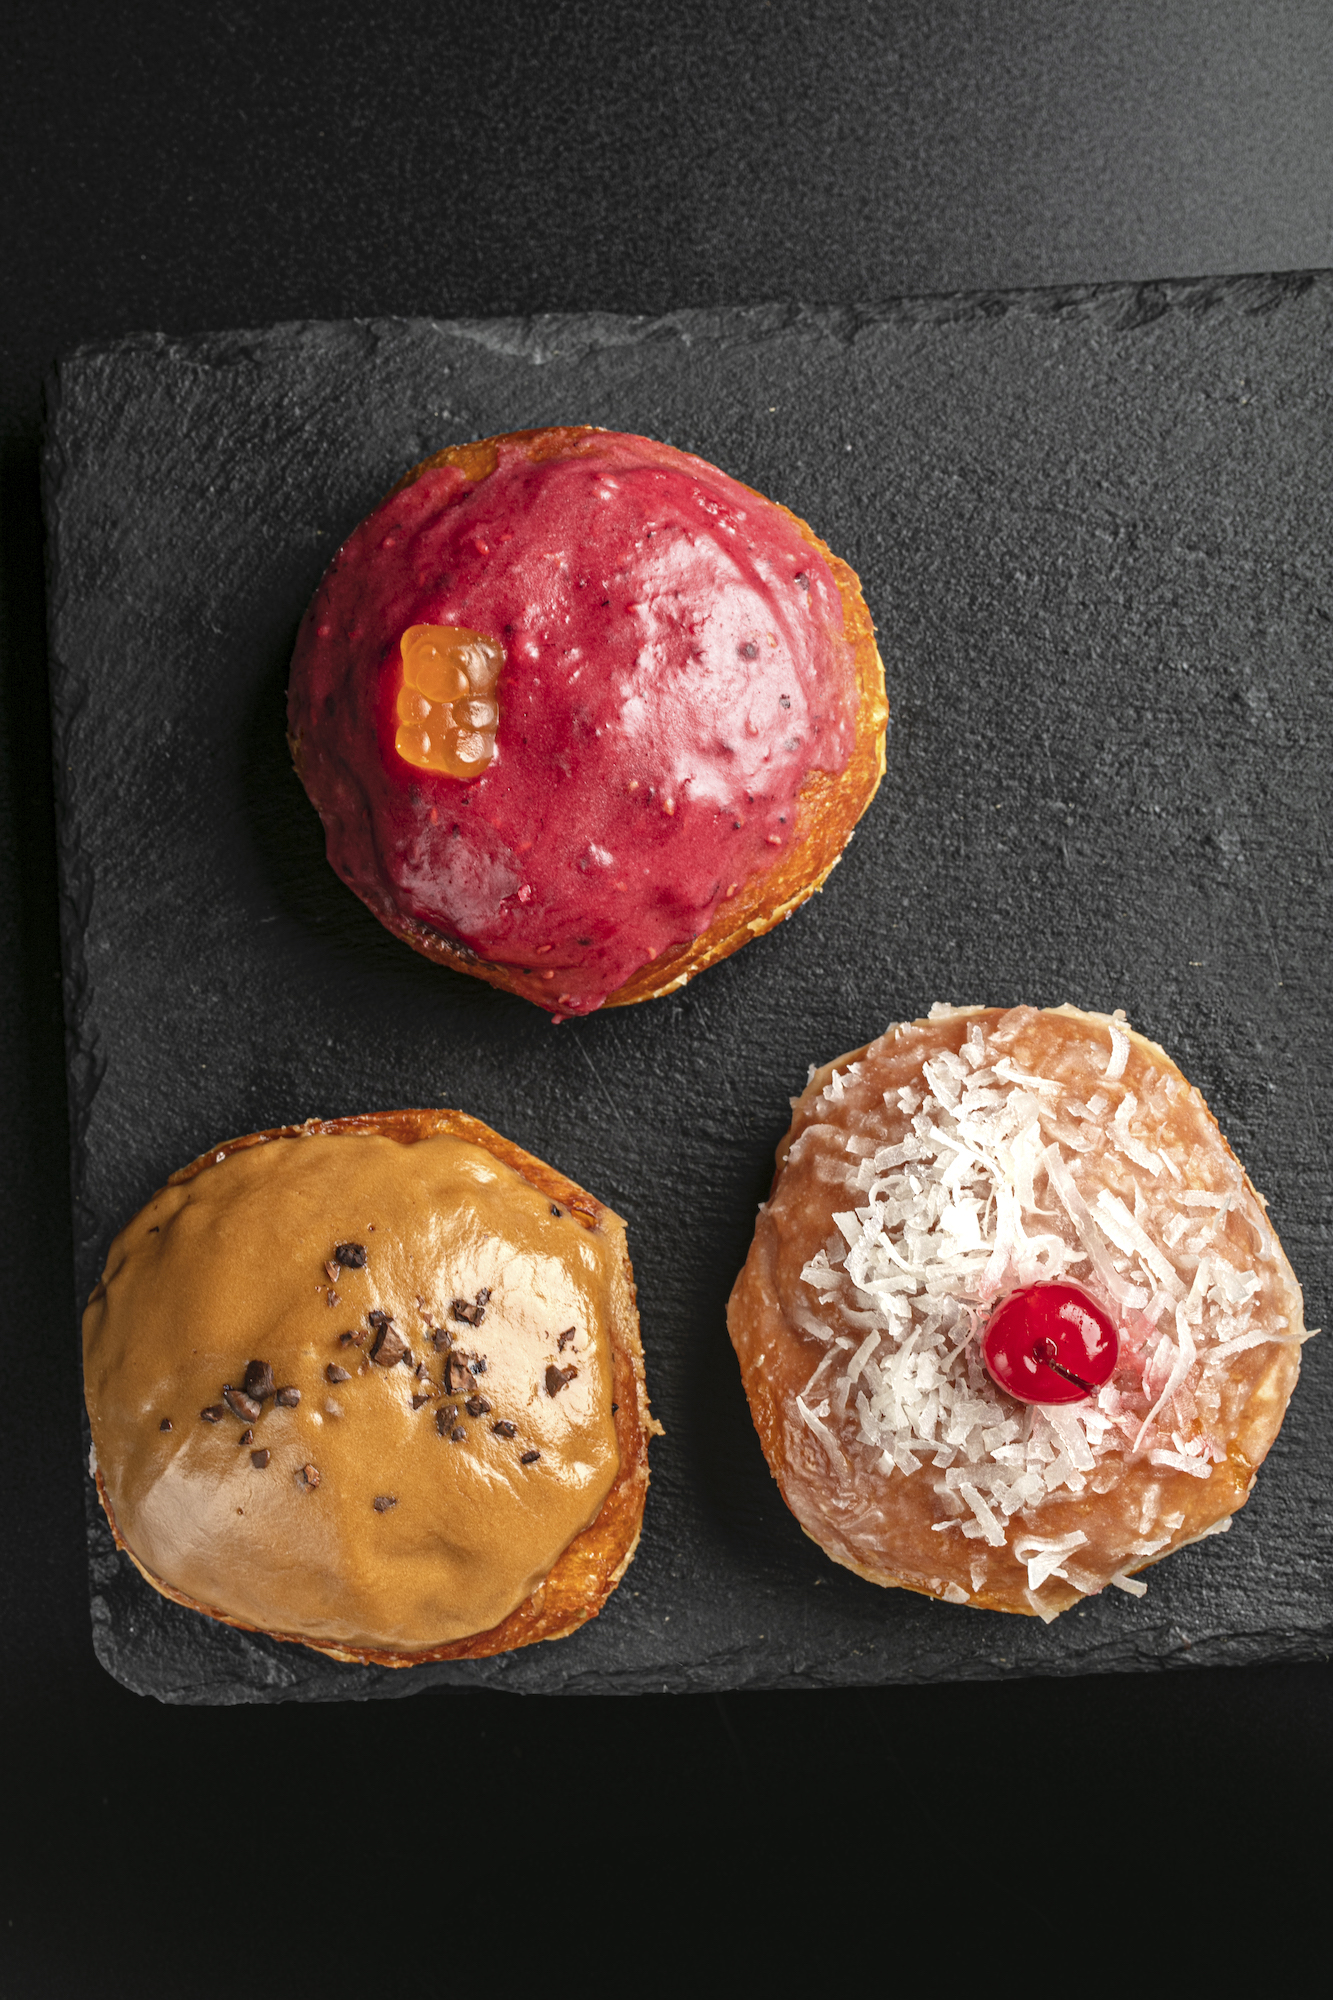 Poison doughnut trio of Berries Yakult, Piña Colada, and Irish Coffee